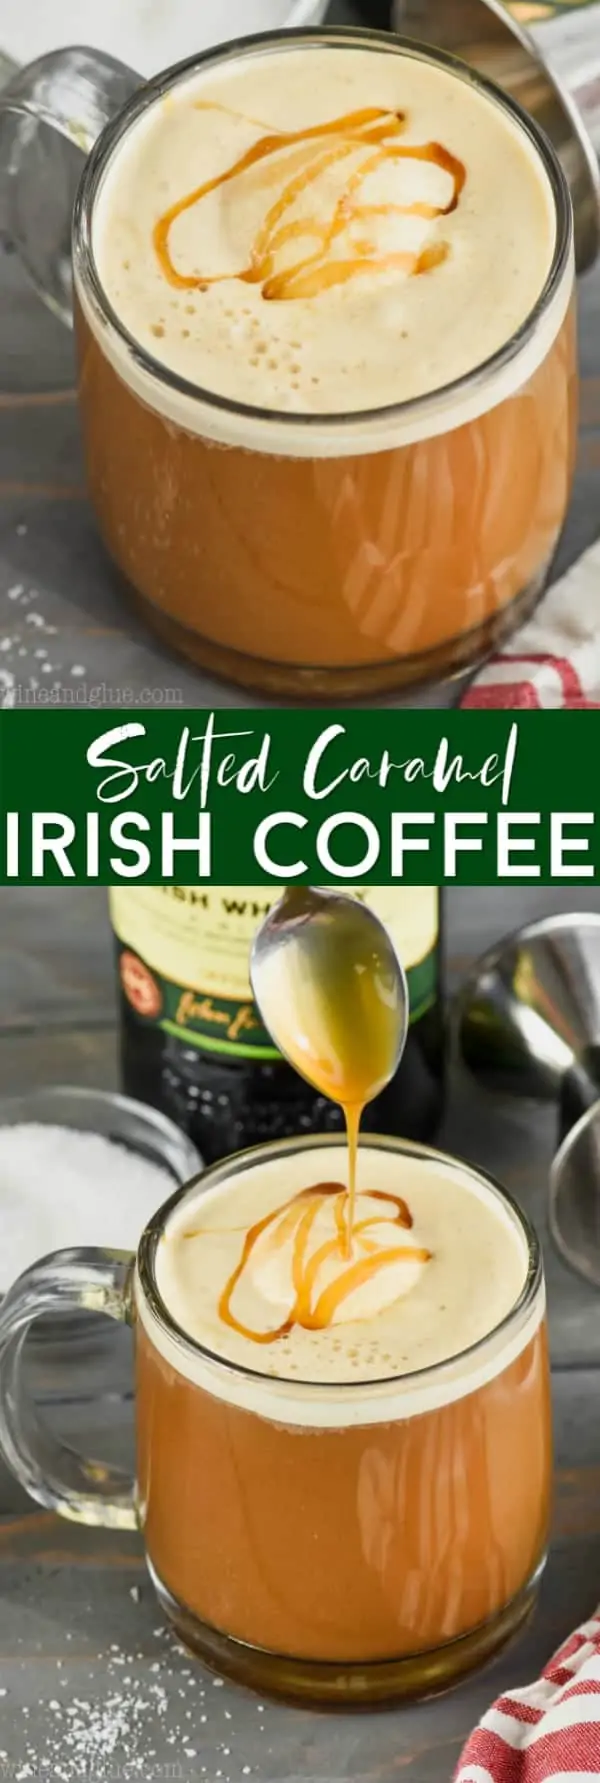 collage of photos of salted caramel Irish coffee recipe